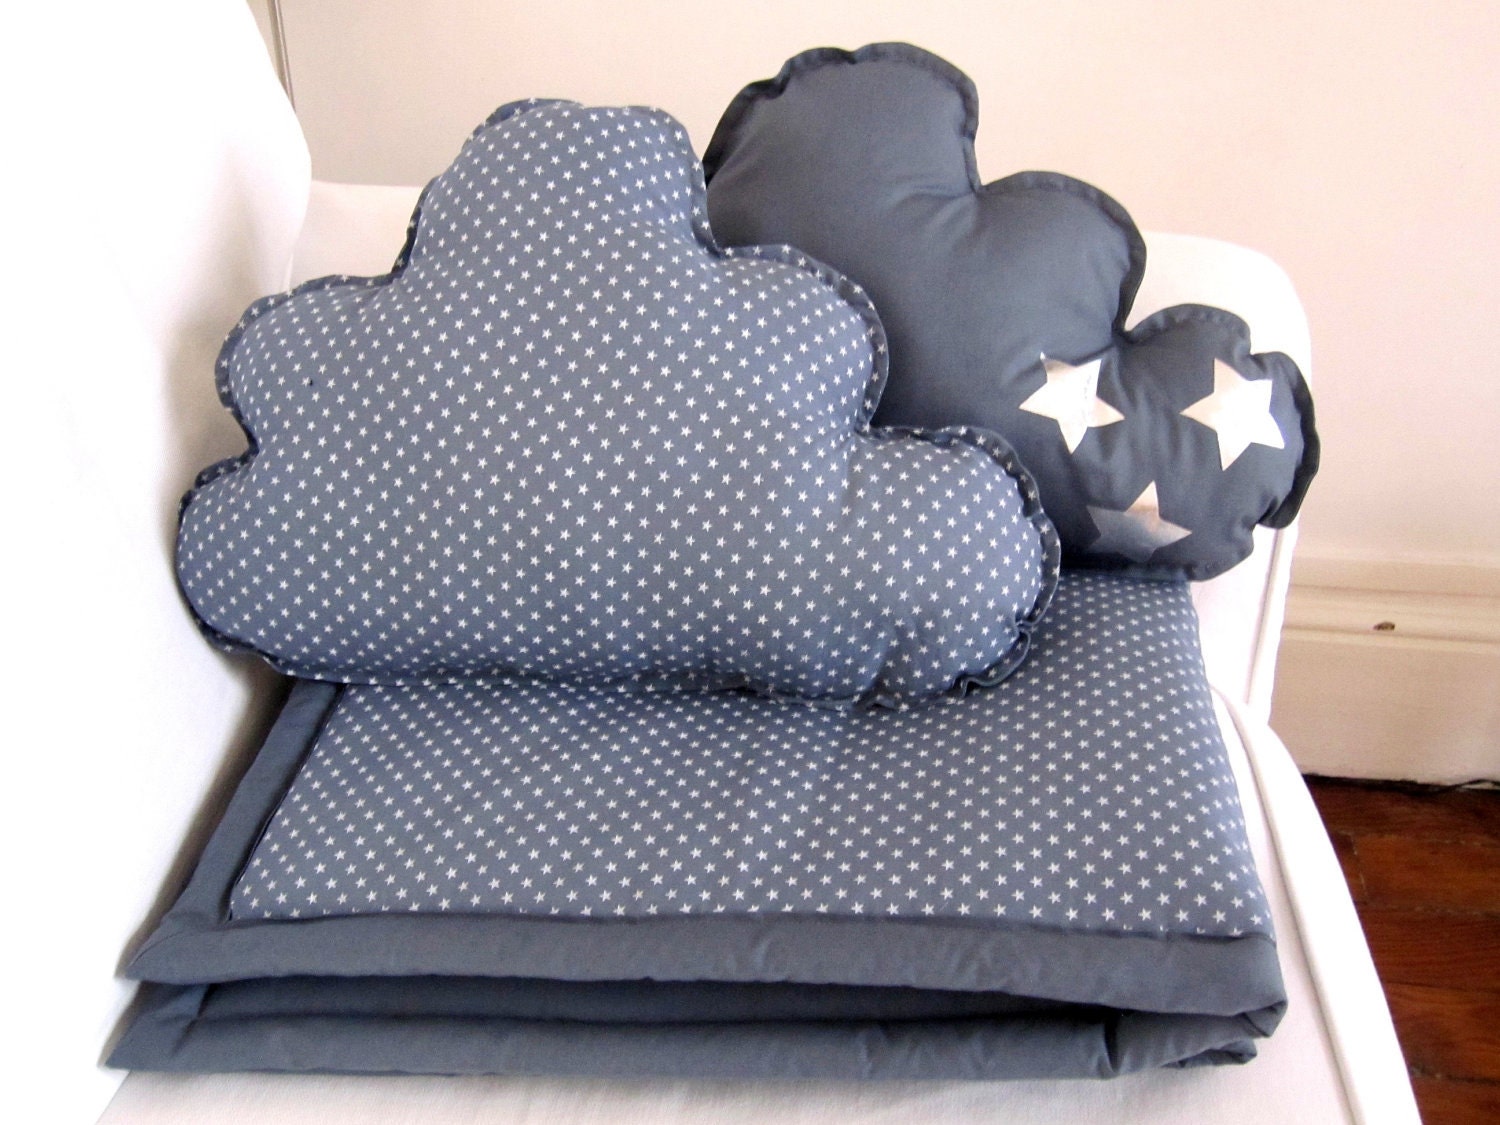 Plaid et coussins nuage gris étoiles - Blanket and Pillows grey with white stars